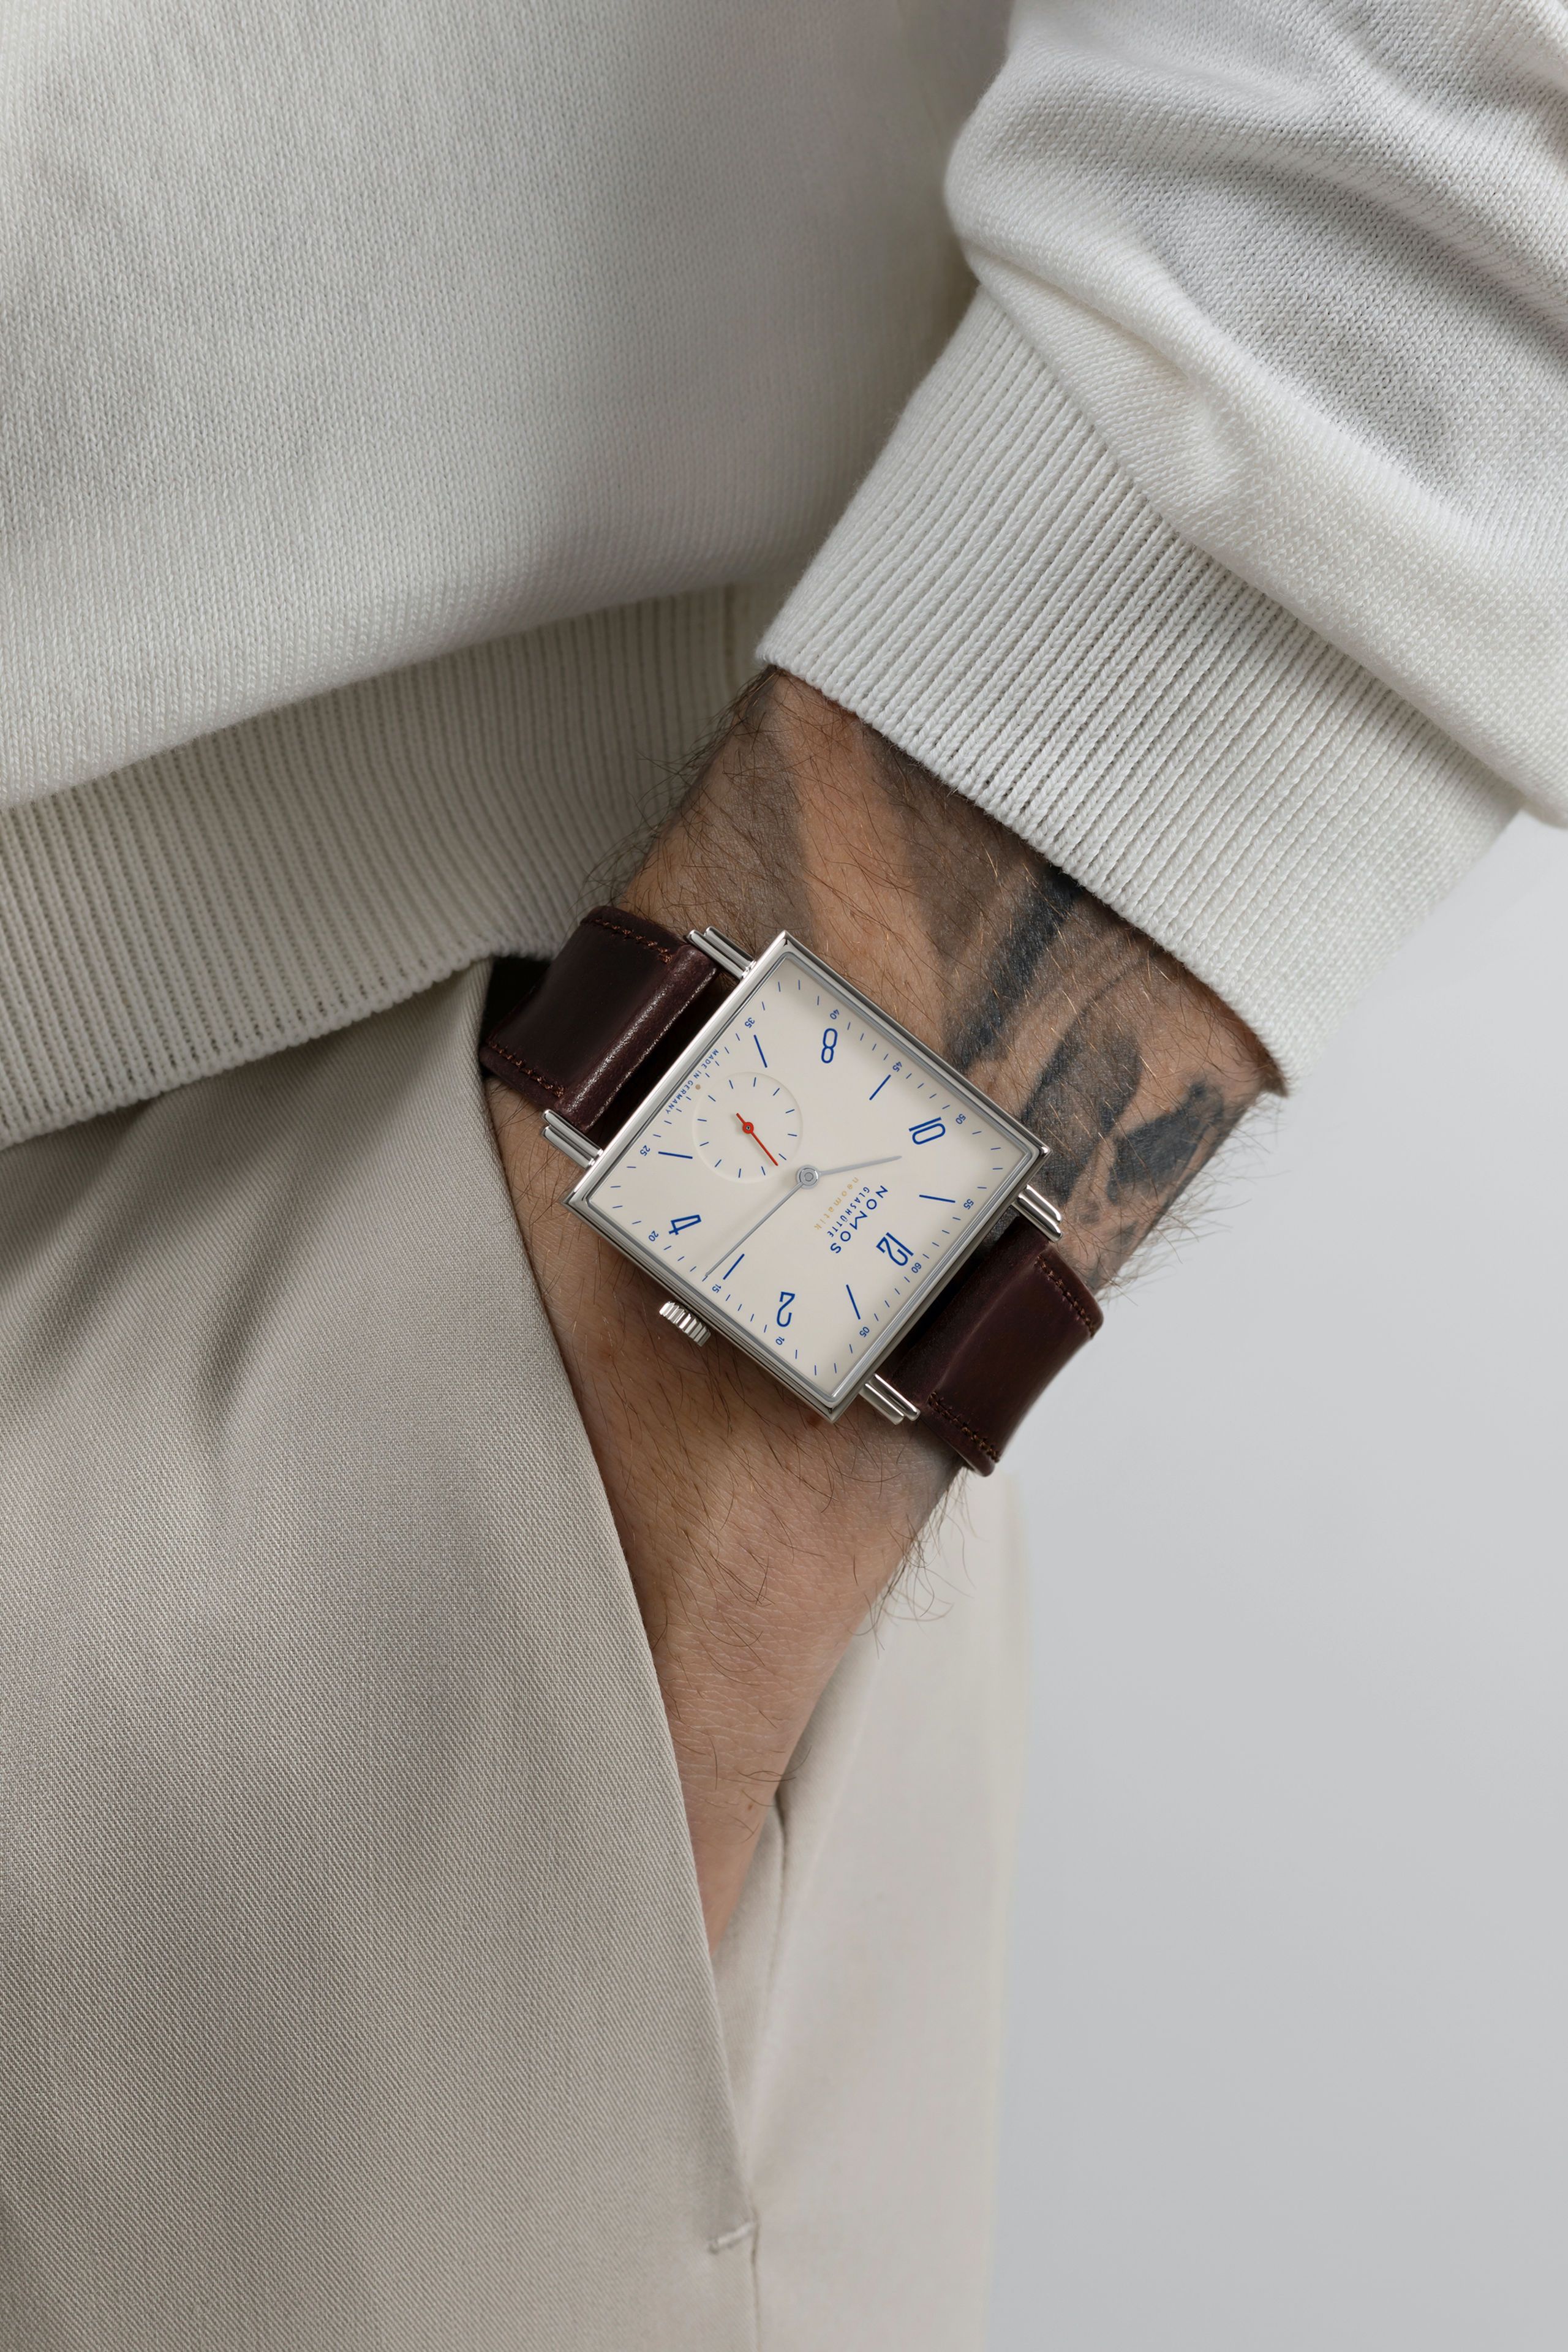 NOMOS Tetra neomatik 175 Years Watchmaking Glashütte Off-White 421.S1 7